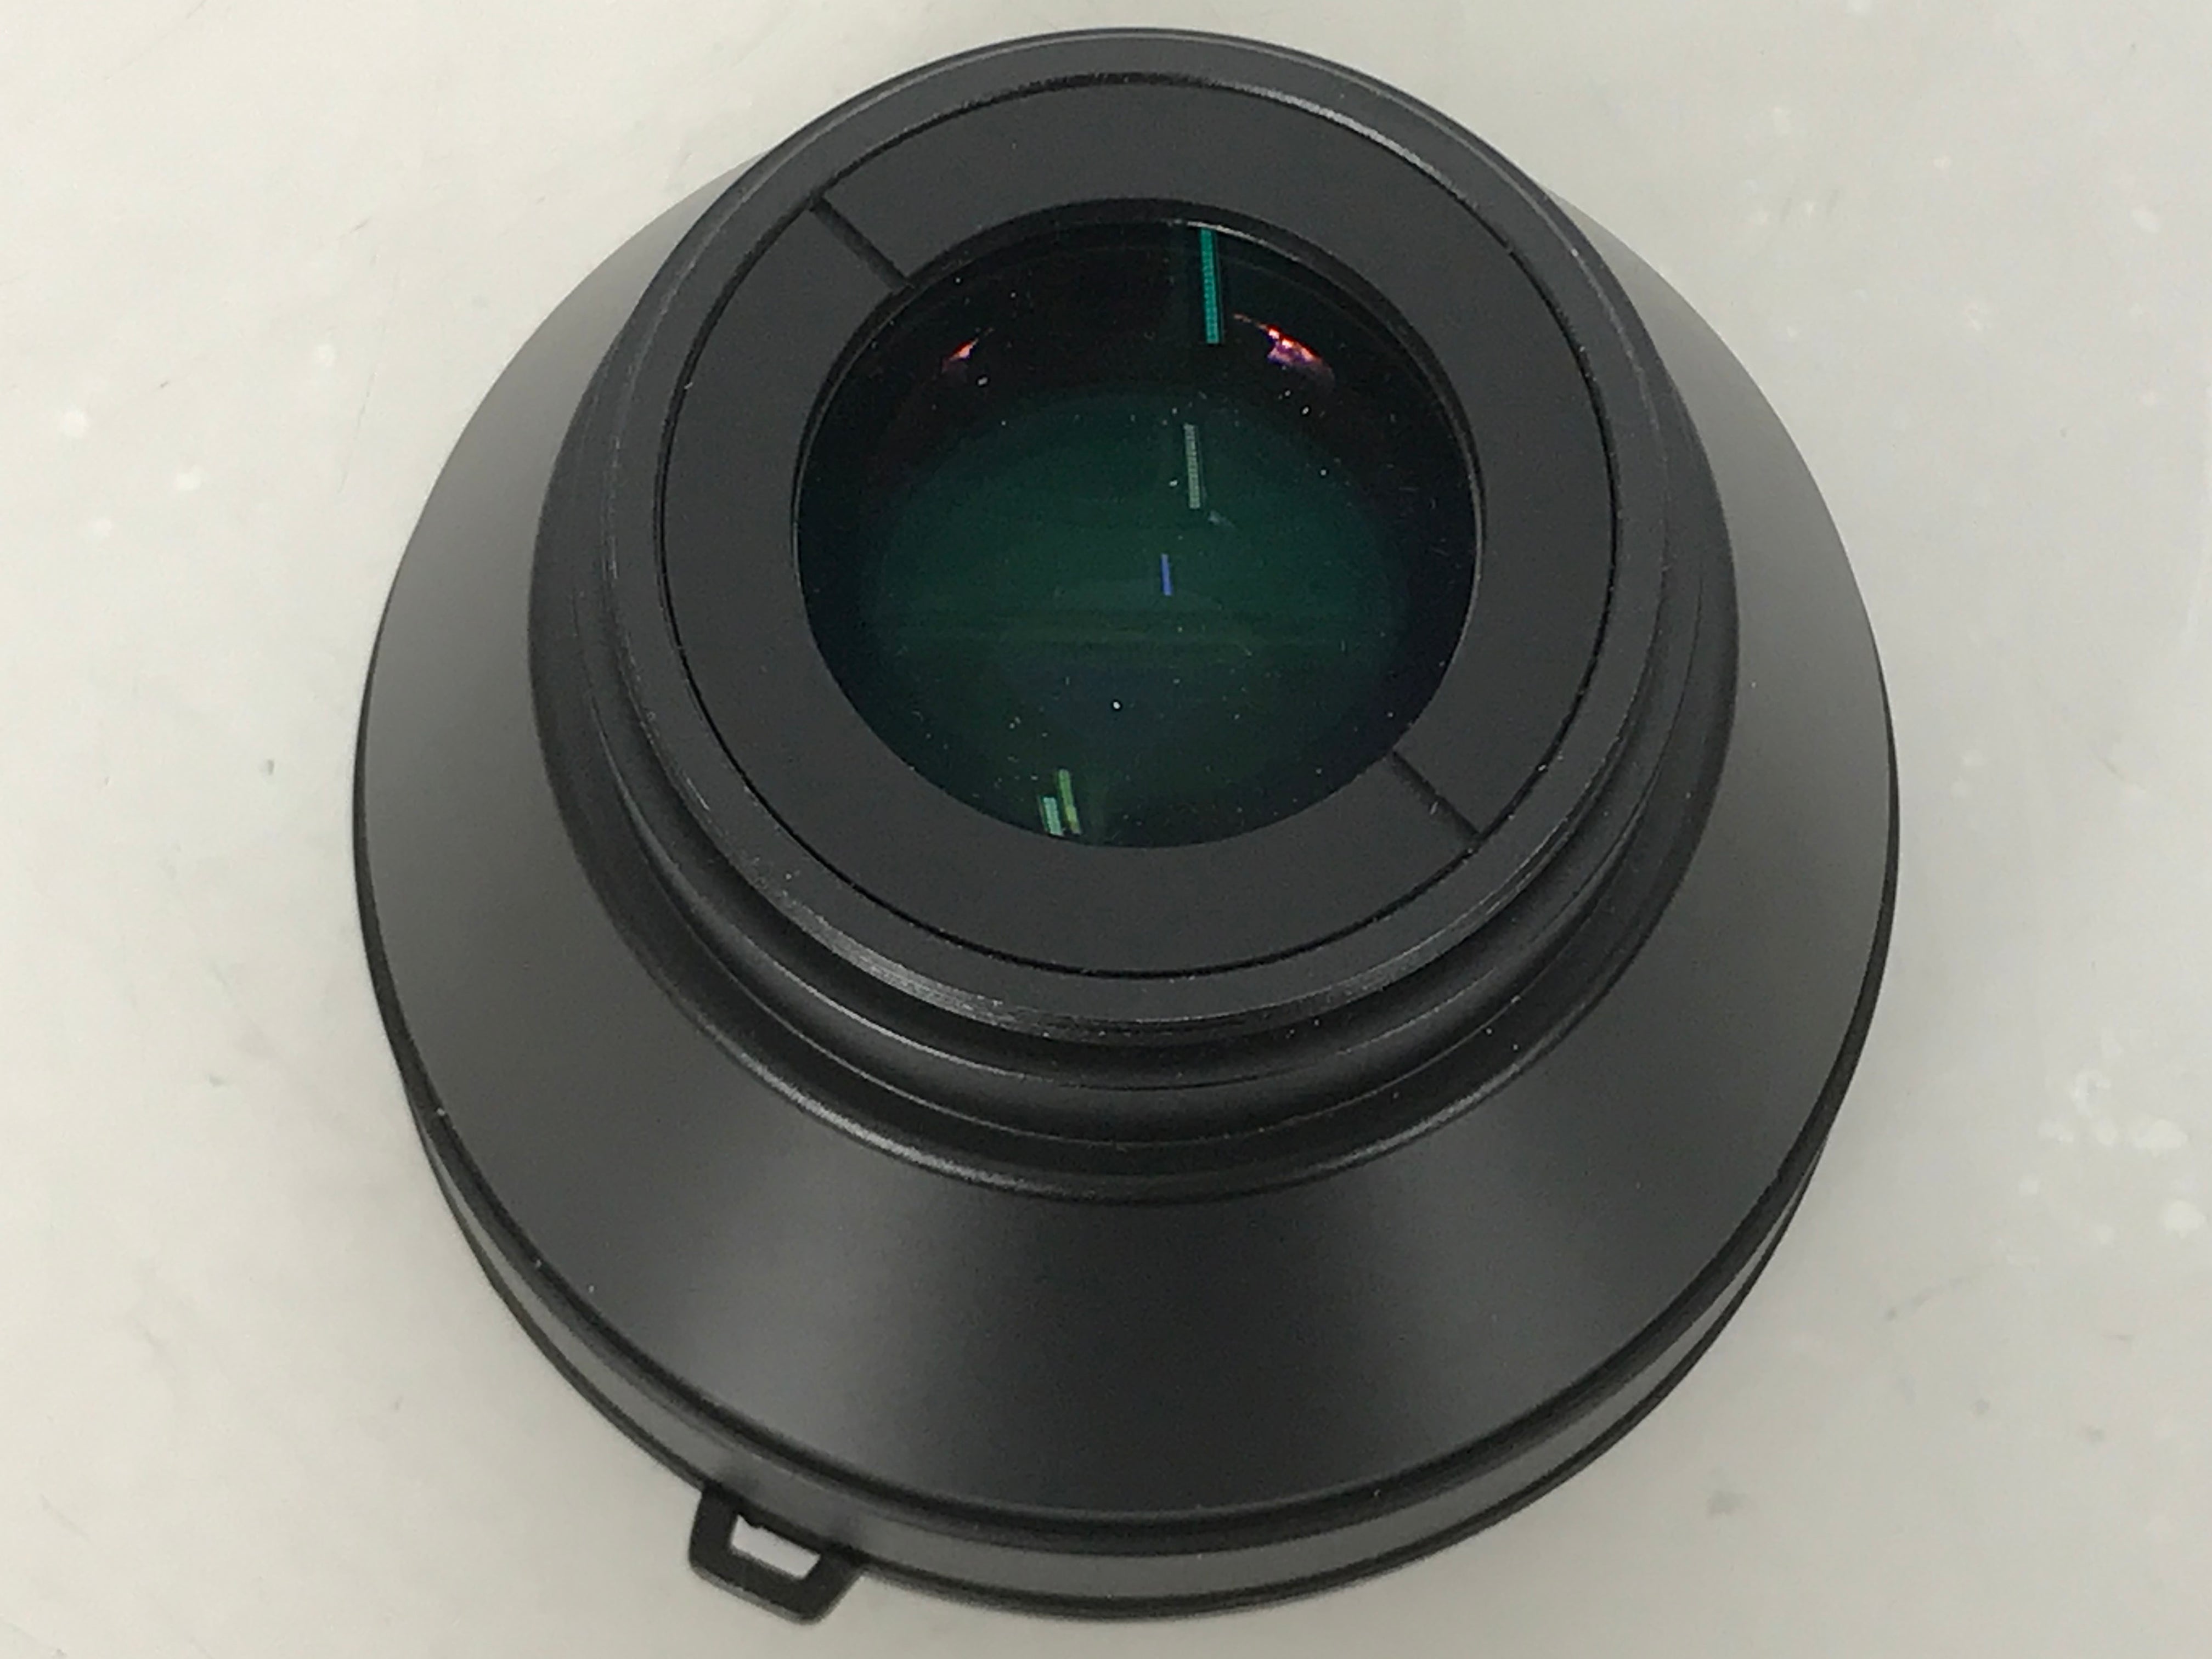 Sony VCL-HG1758 x1.7 Tele Conversion Lens